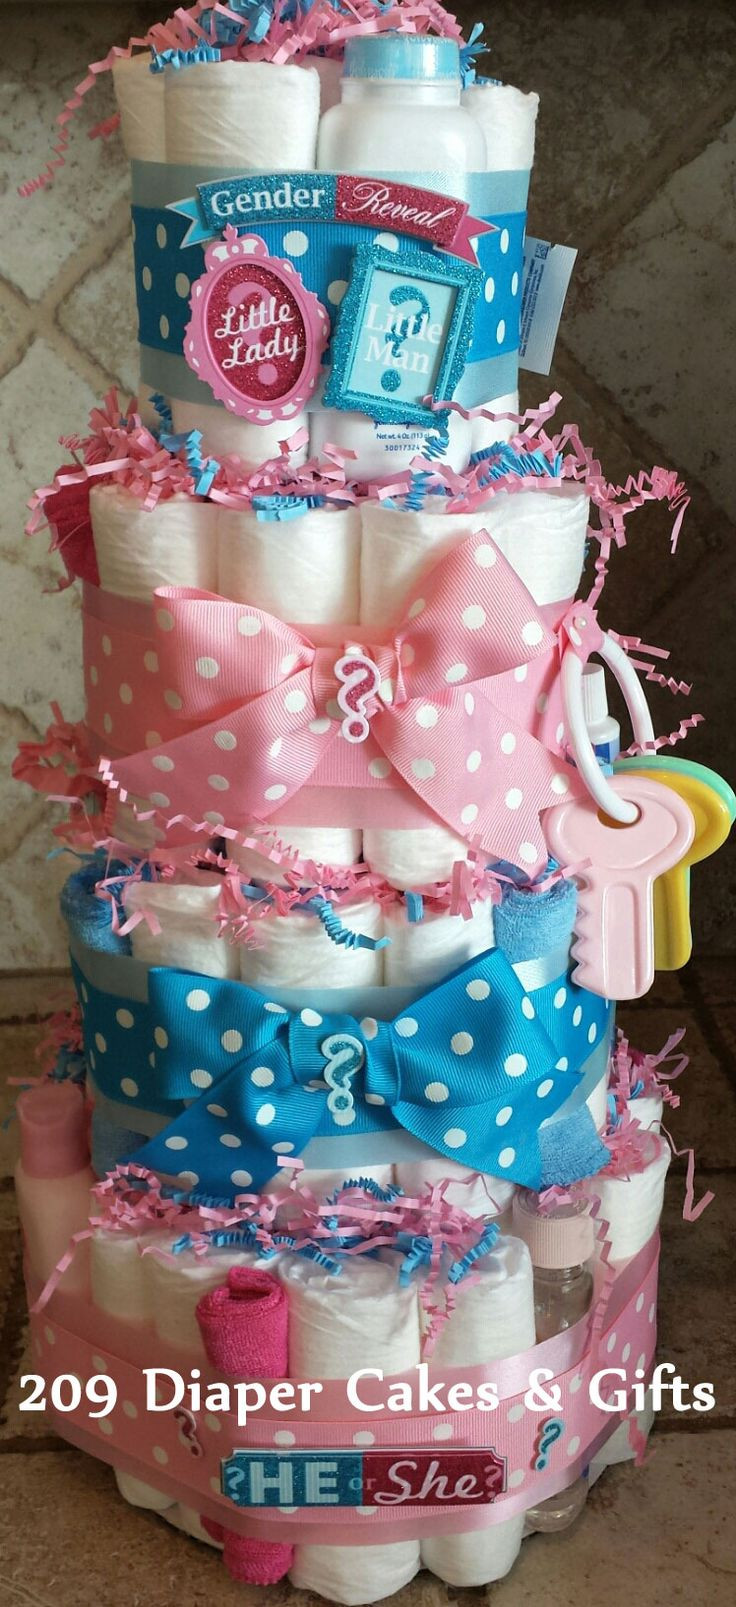 Baby Gender Reveal Gift Ideas
 4 Tier Pink & Blue Gender Reveal Diaper Cake by 209 Diaper